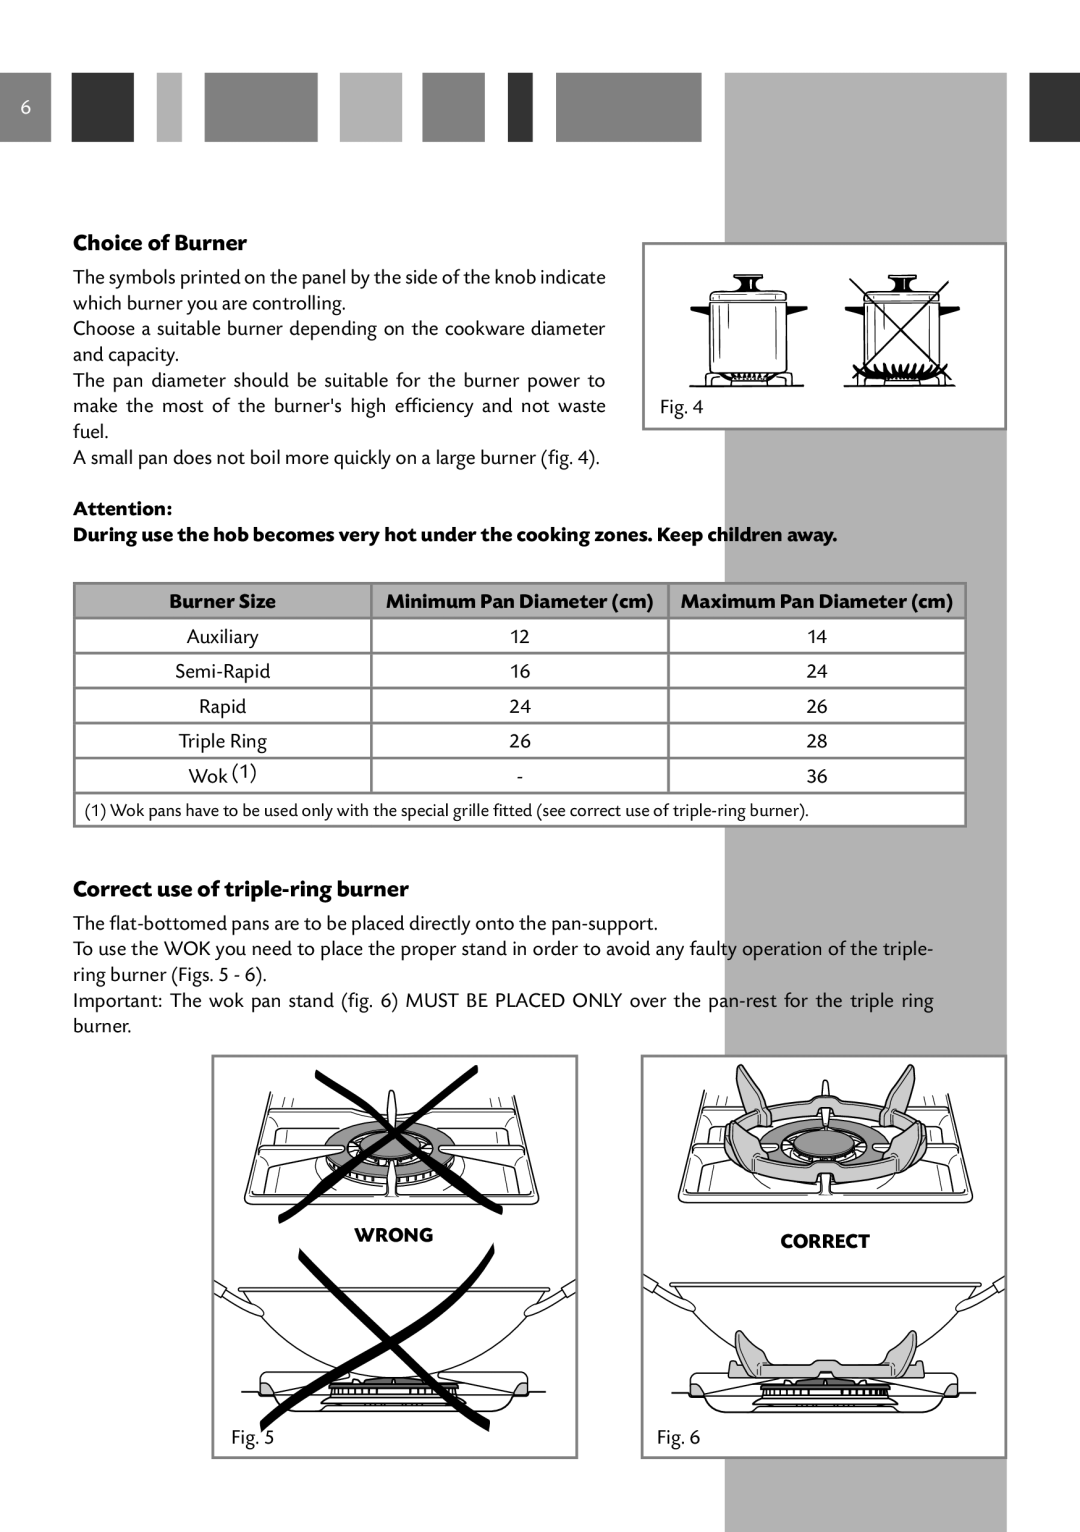 CDA HCG 931 manual Choice of Burner, Correct use of triple-ringburner, Burner Size, Wrong, Fig 